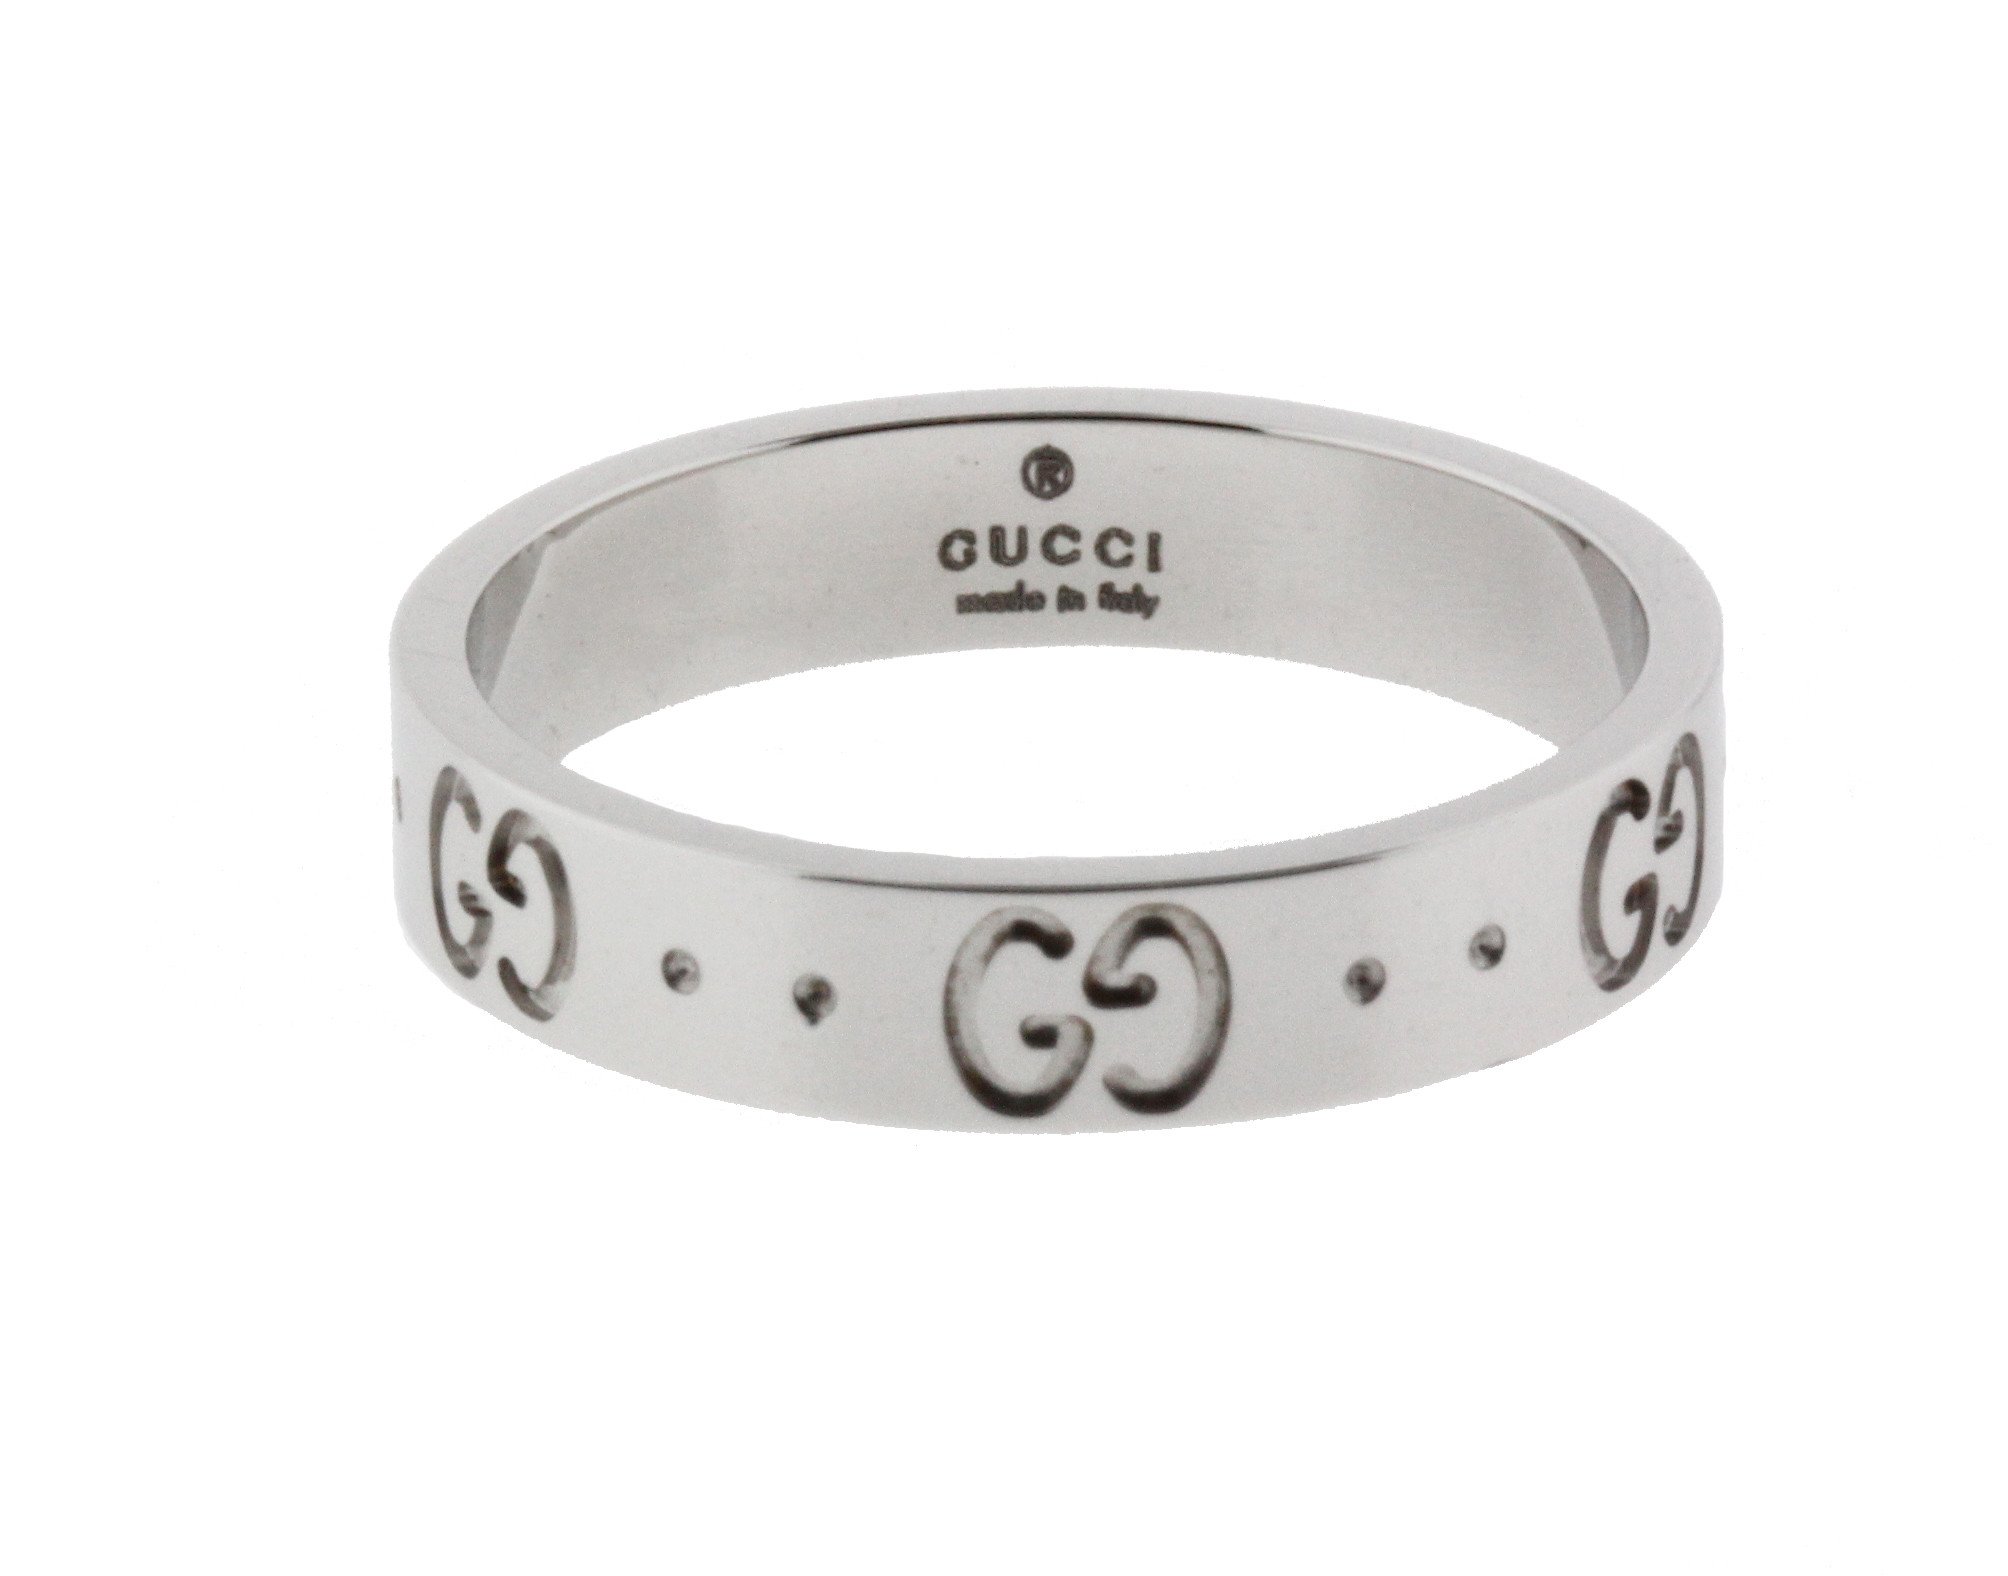 Gucci 073230 09850 9000 Icon Thin Band Band Ring In 18 Karat White Gold New In Box 701c3360cc1c4802b183ea4b89560366.JPG